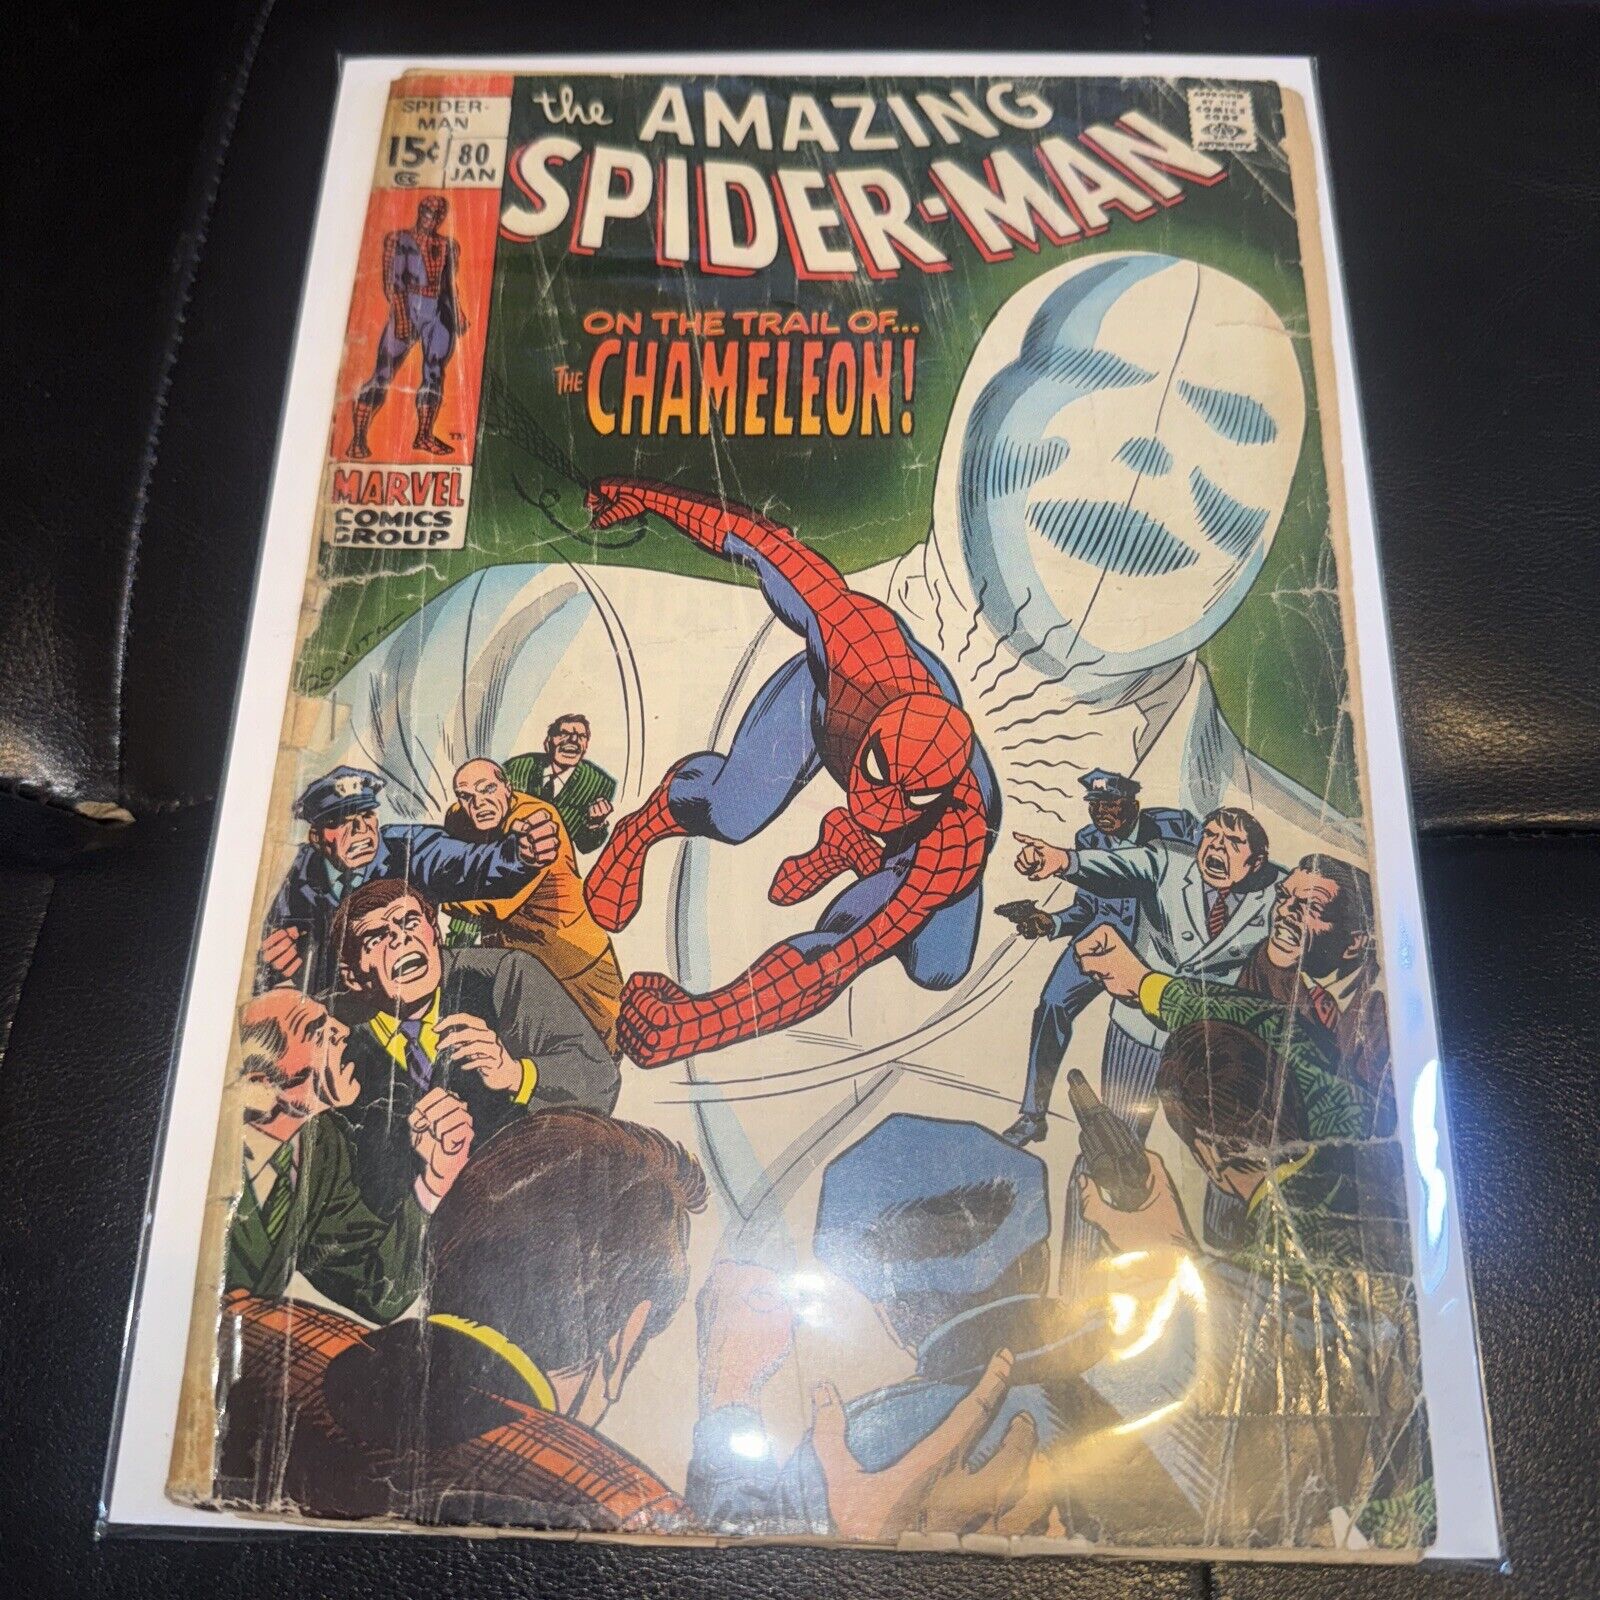 The Amazing Spider-Man #80 (Marvel Comics January 1970)